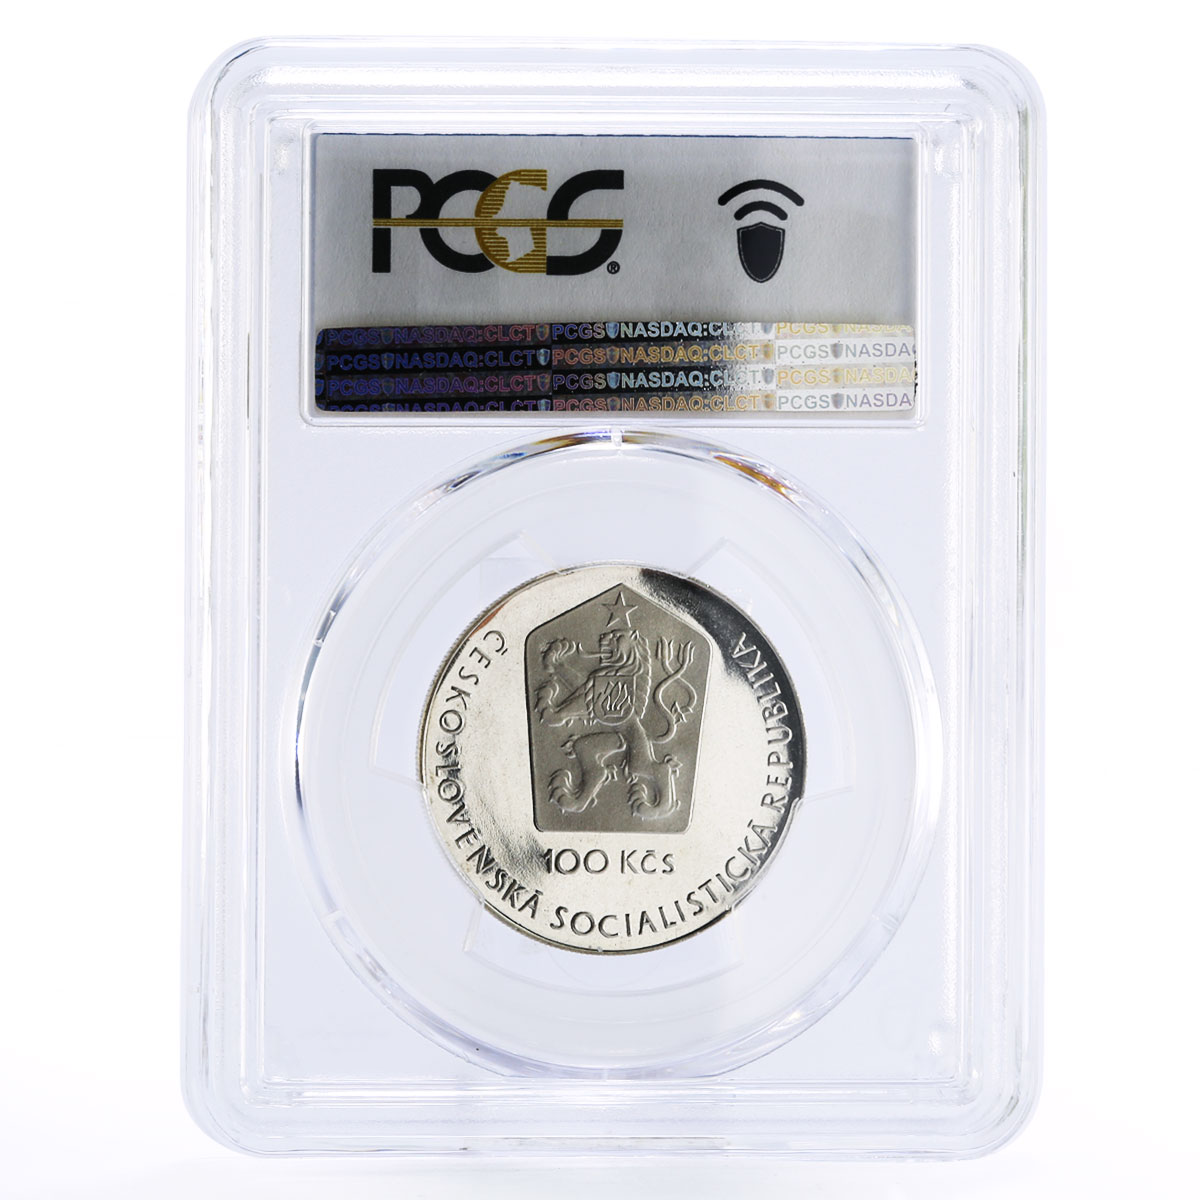 Czechoslovakia 100 korun 20 Years of Gagarin in Space PR69 PCGS silver coin 1981